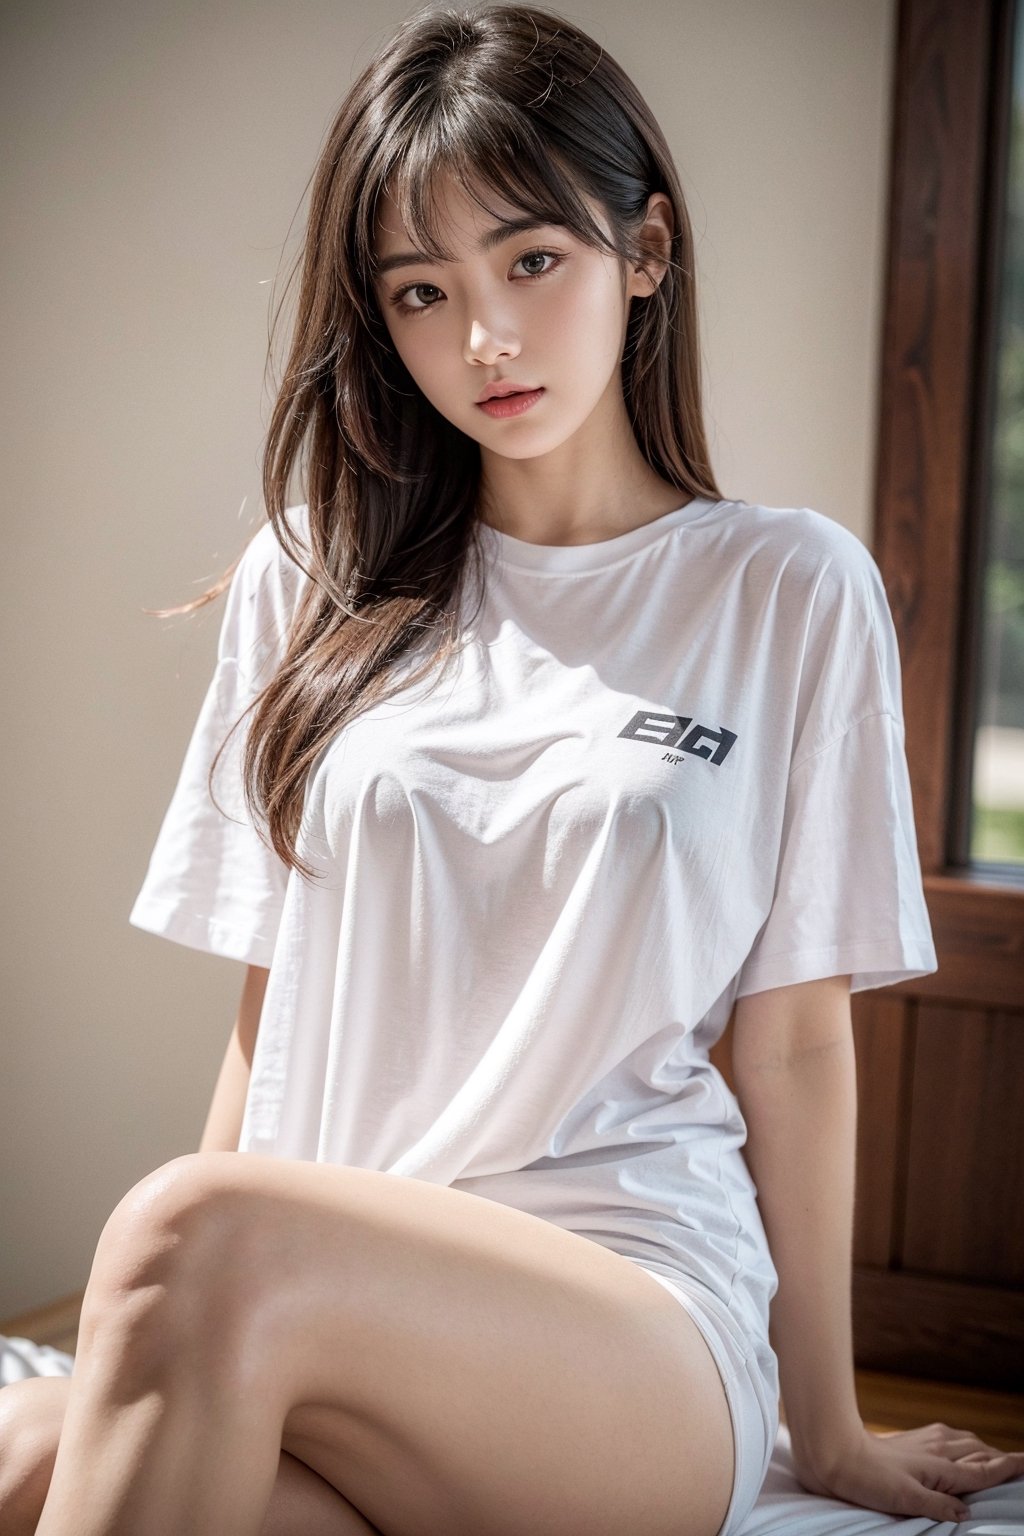 ultra detailed, very cute girl,wearing a t shirt,bottomless